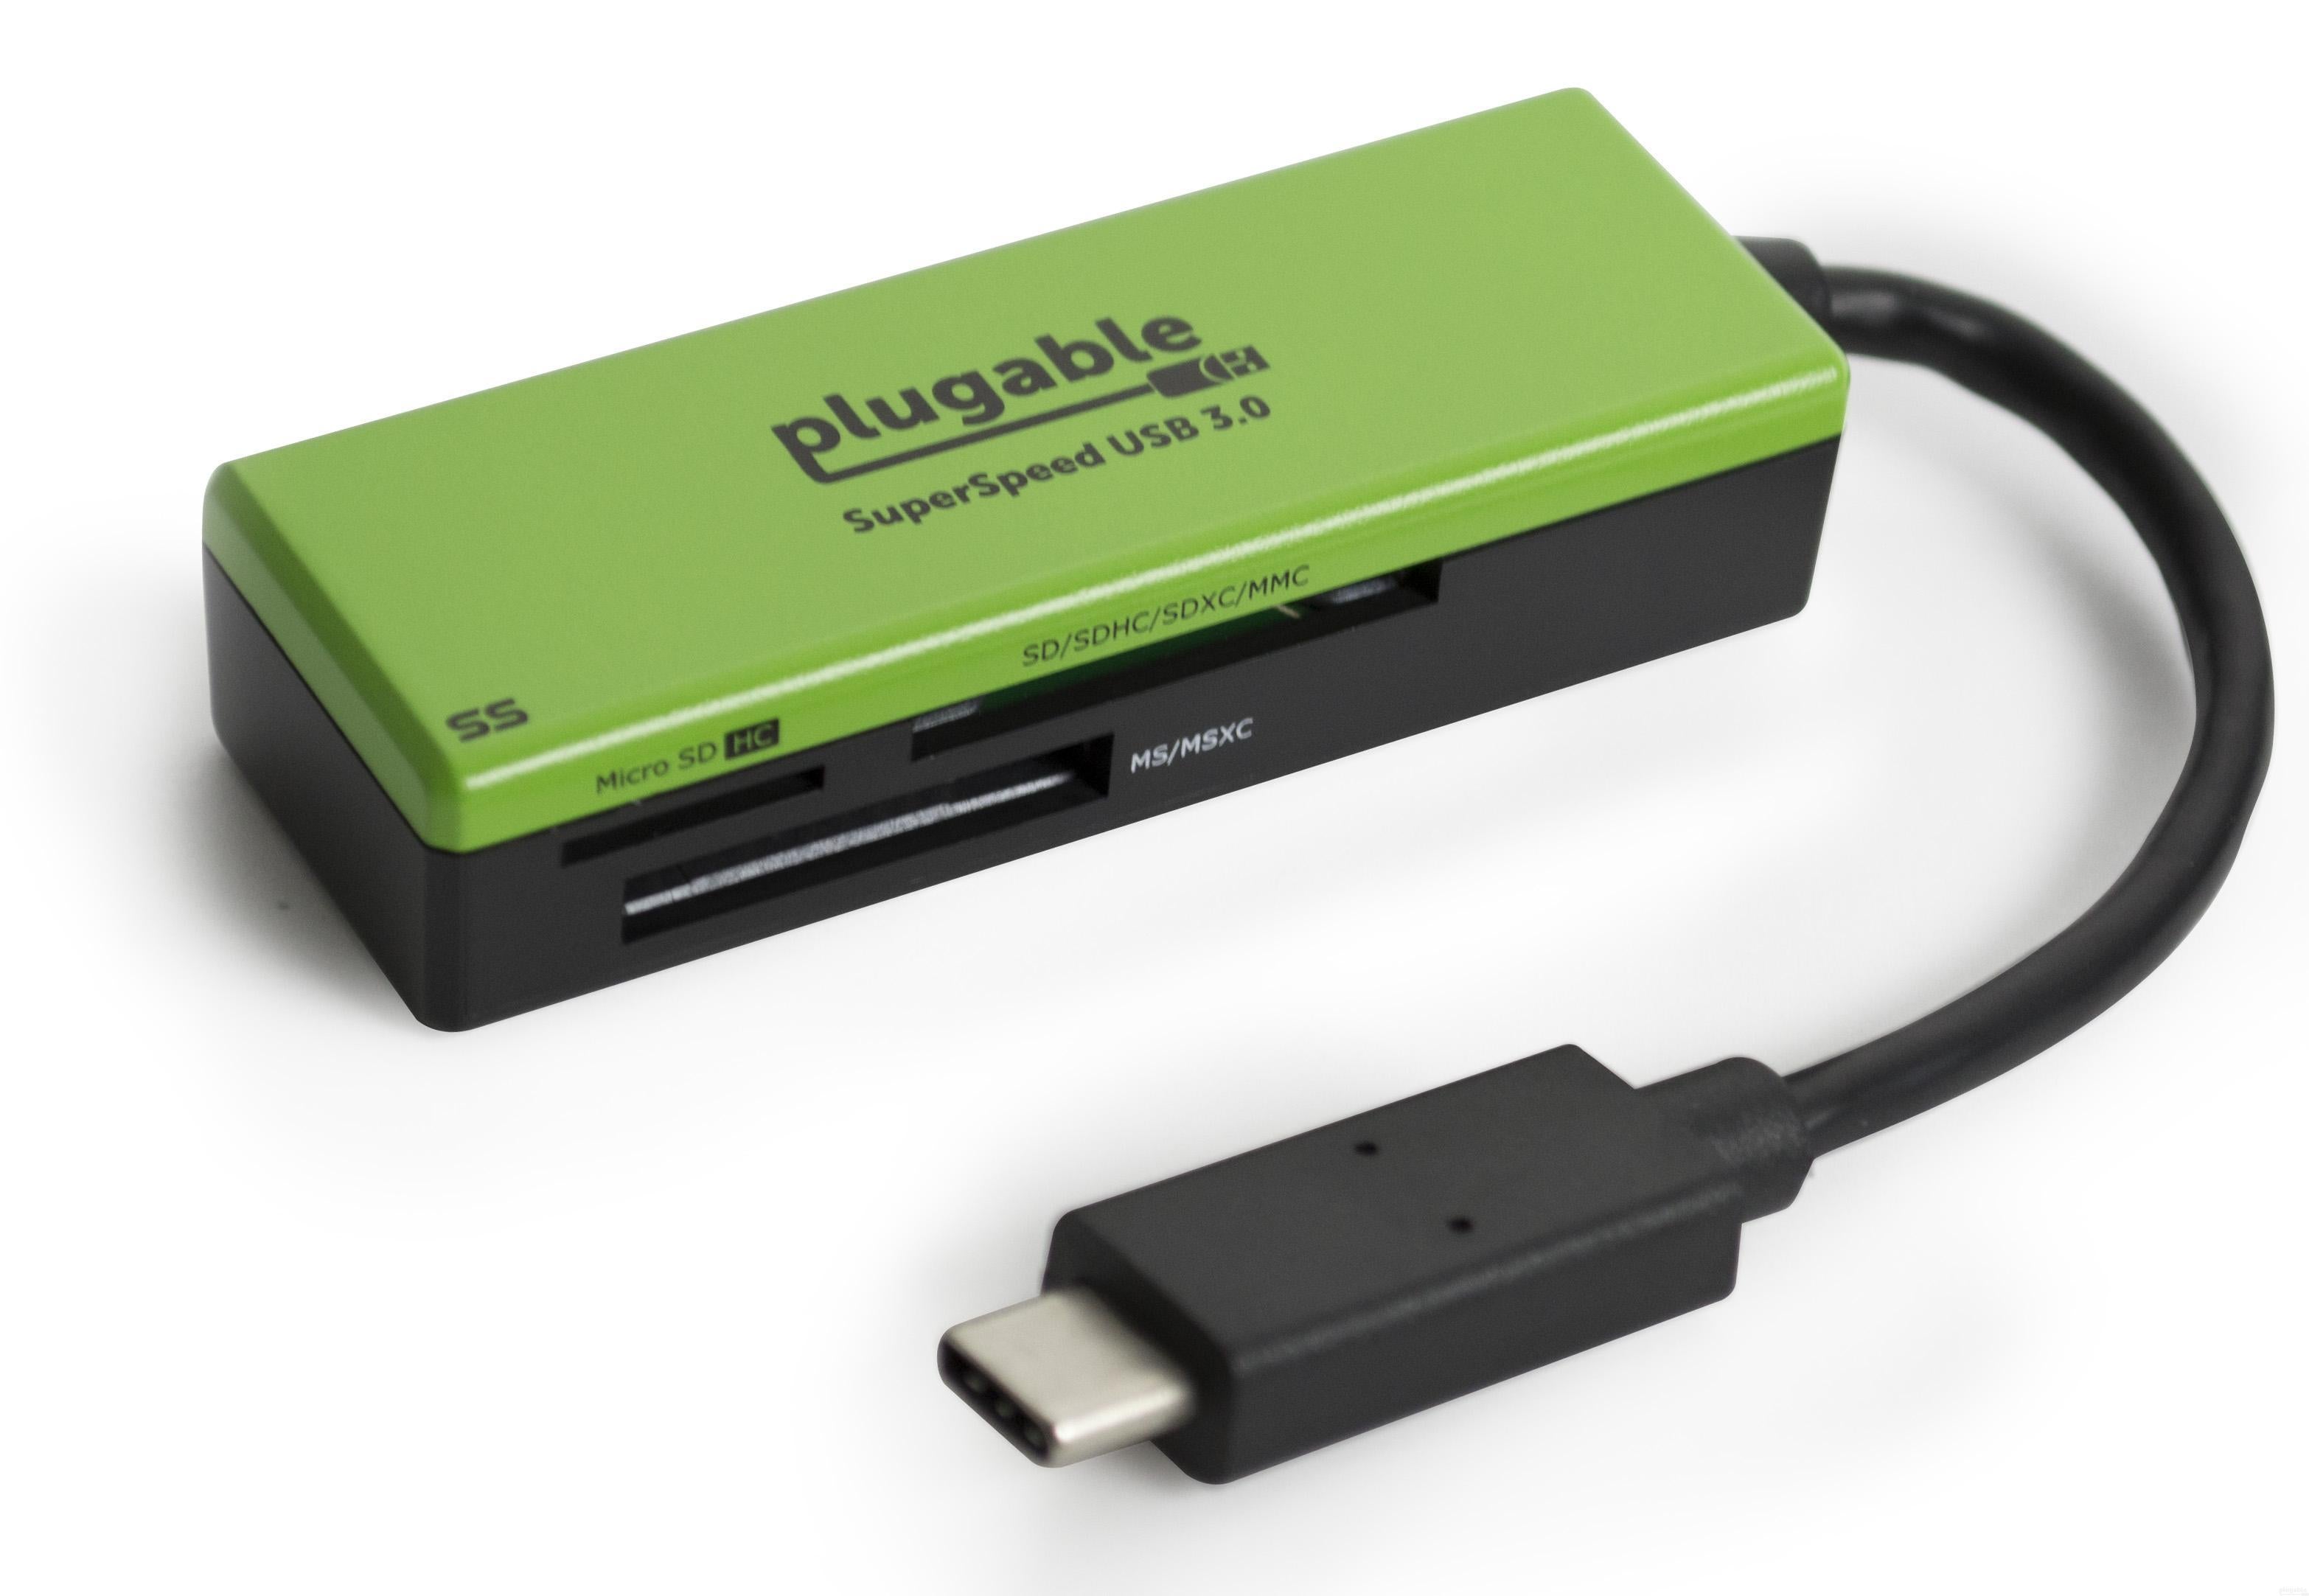 Plugable USB Type-C Flash Memory Card Reader – Plugable Technologies